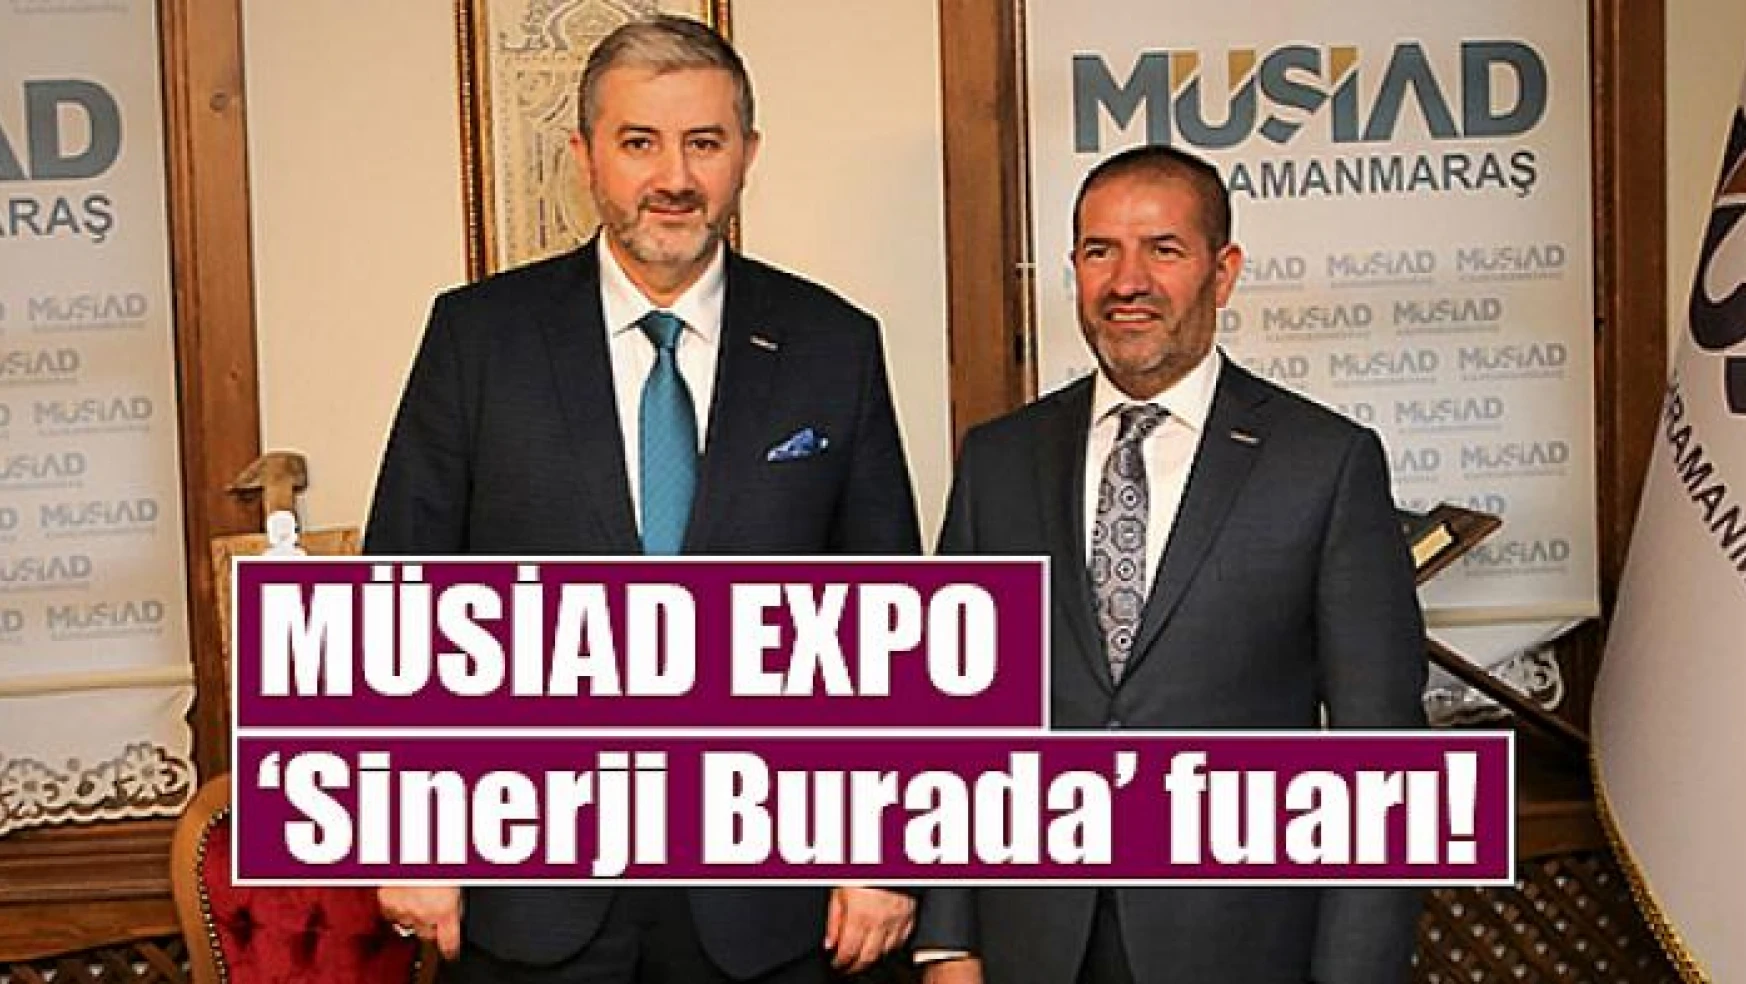 MÜSİAD EXPO 'Sinerji Burada' fuarı